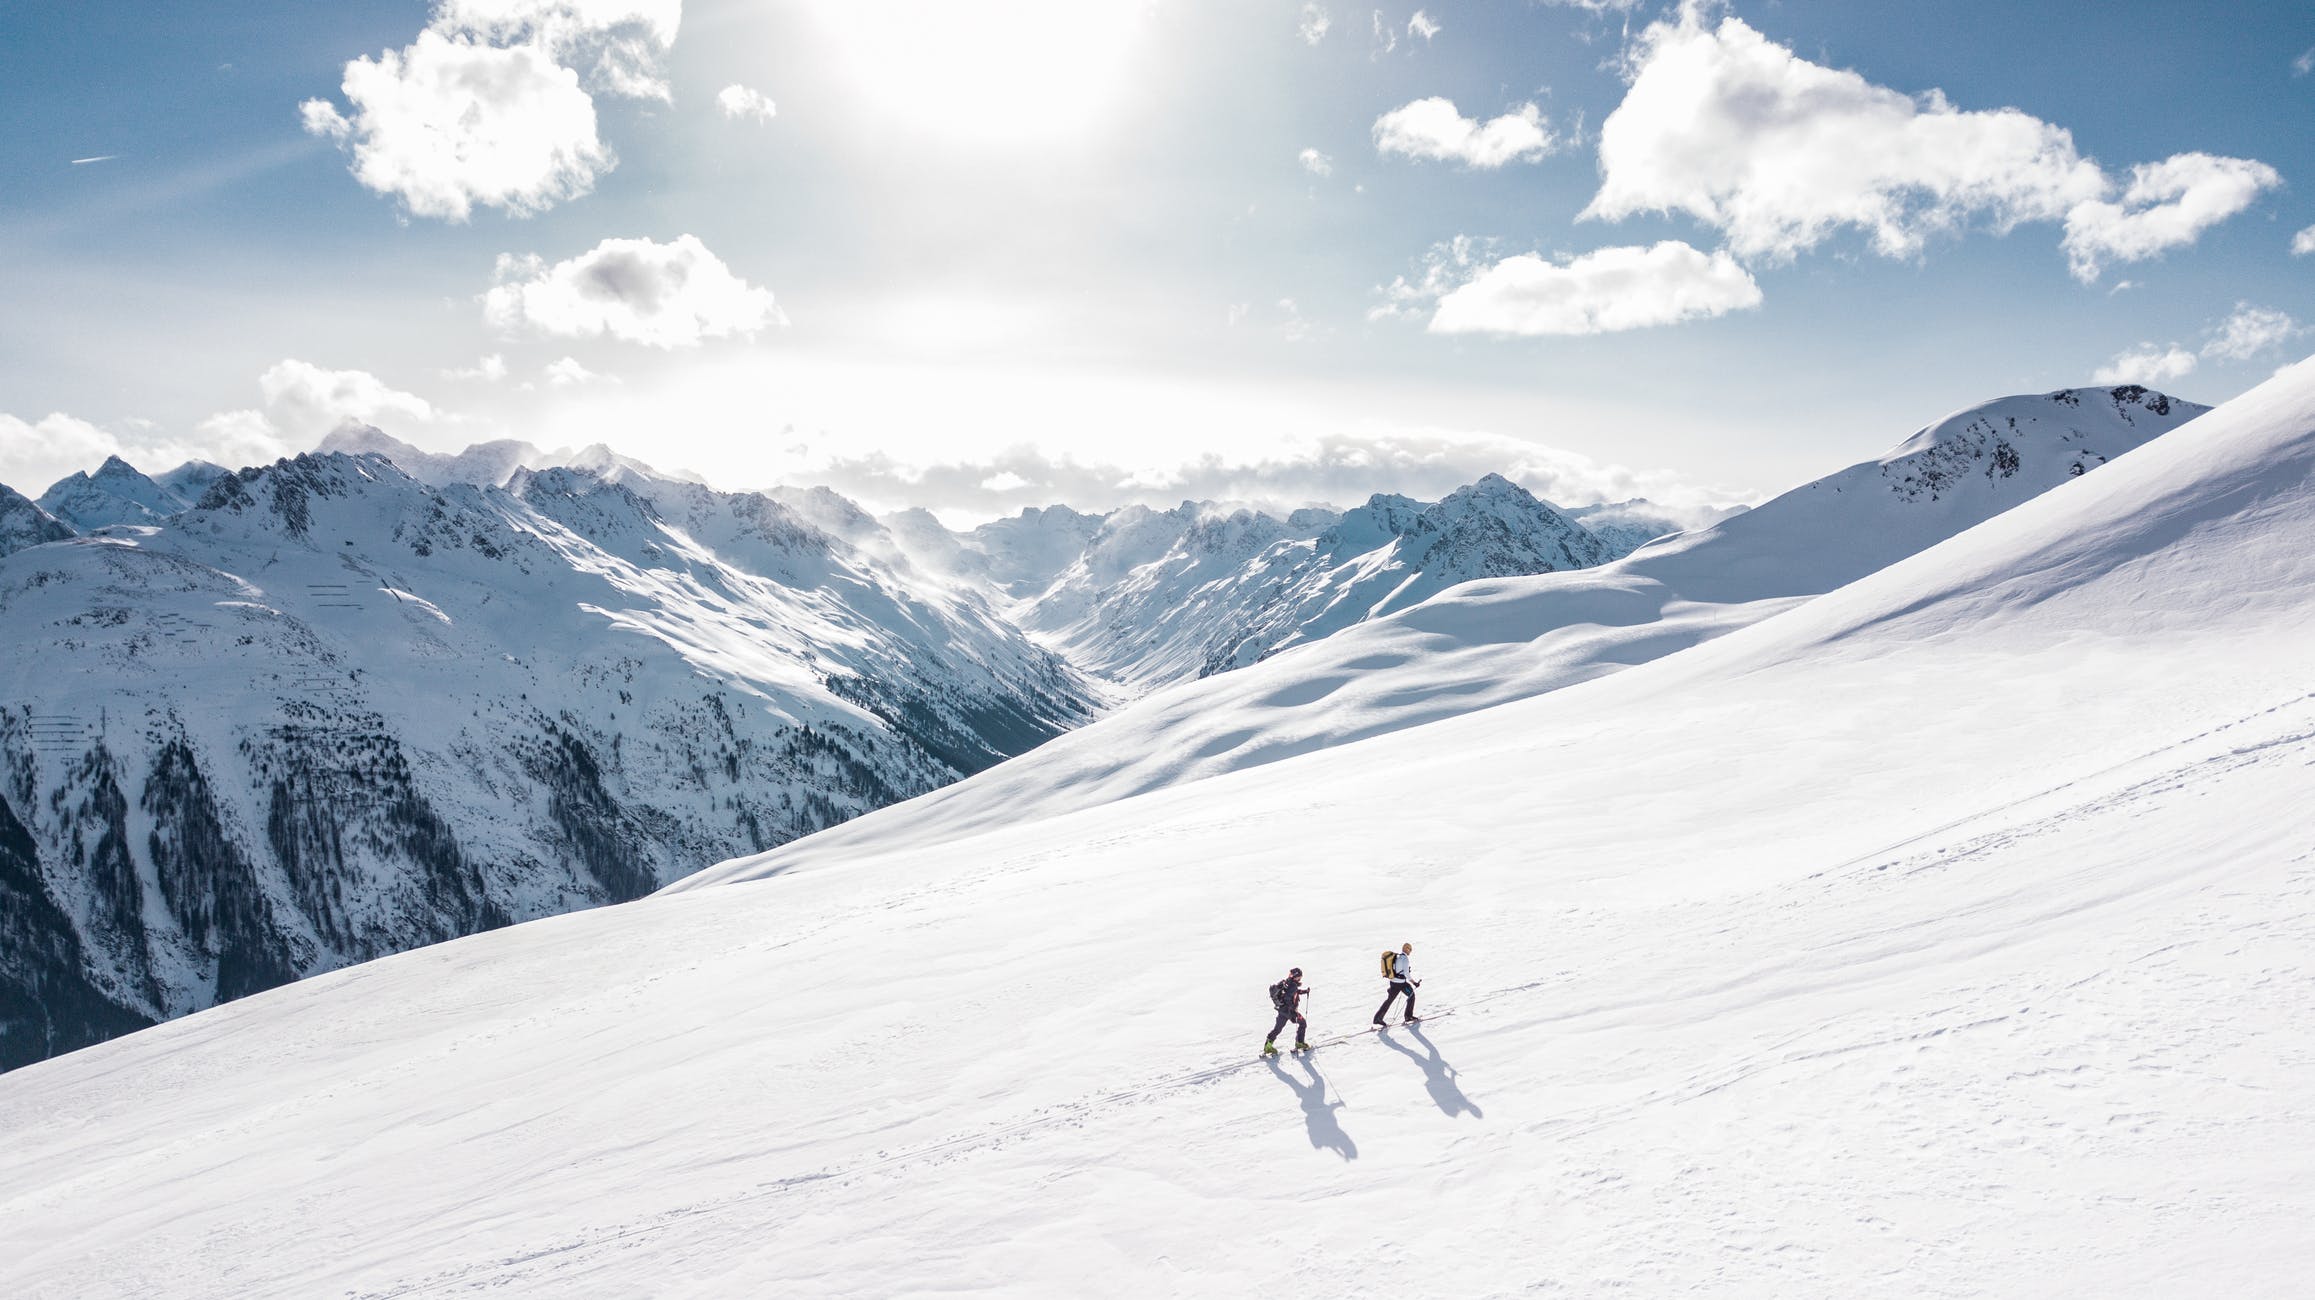 2 people climbing a snowy mountain